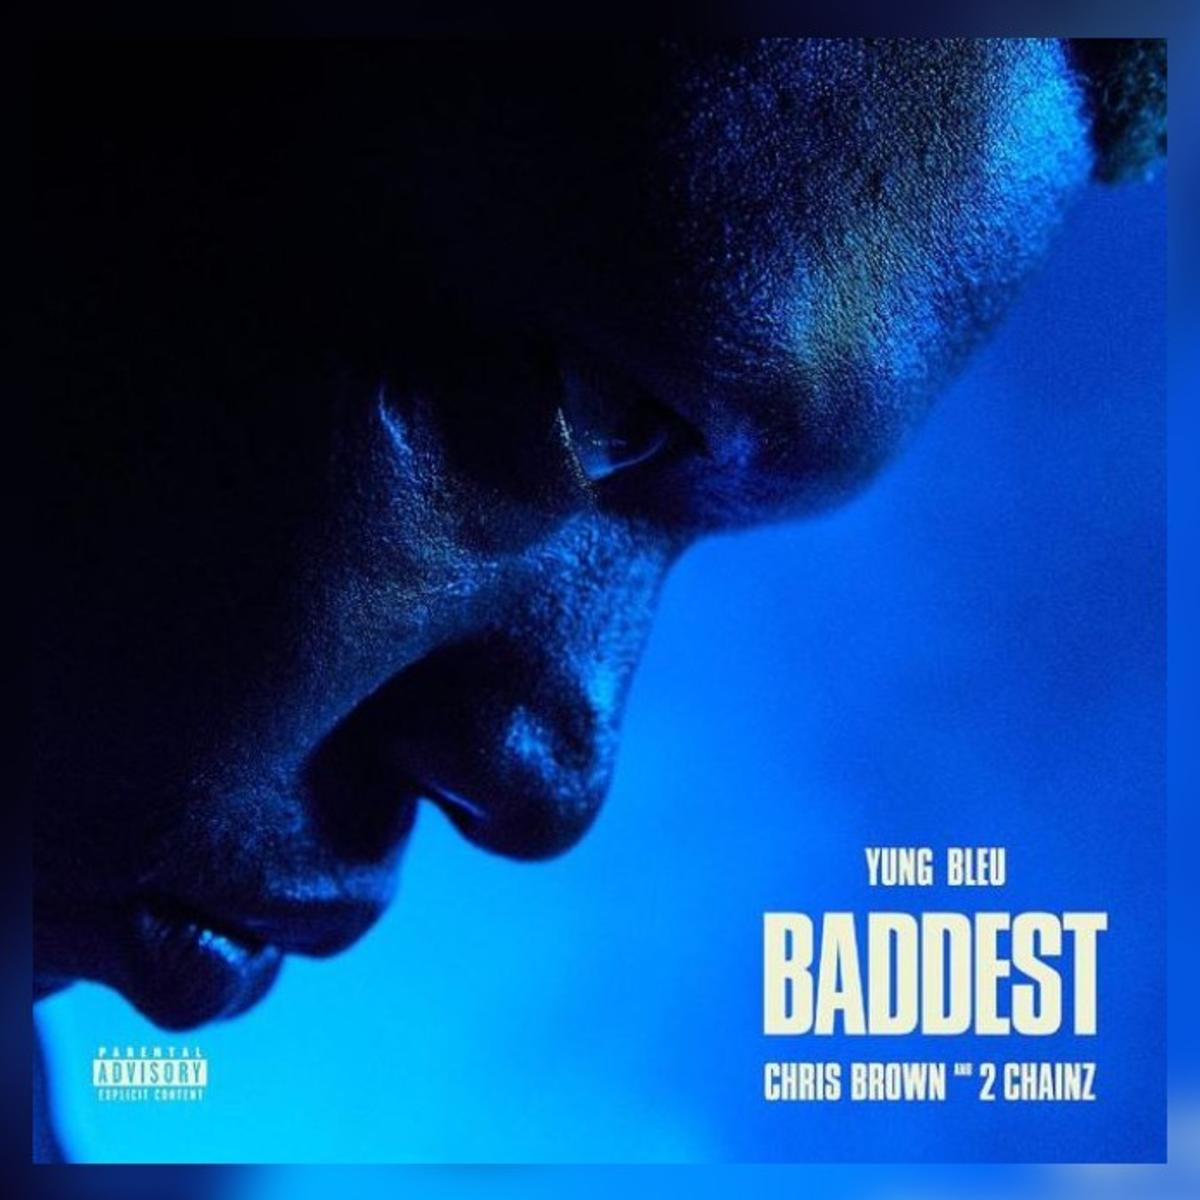 Yung Bleu, Chris Brown & 2 Chainz Unite For Smooth Summer Banger “Baddest”